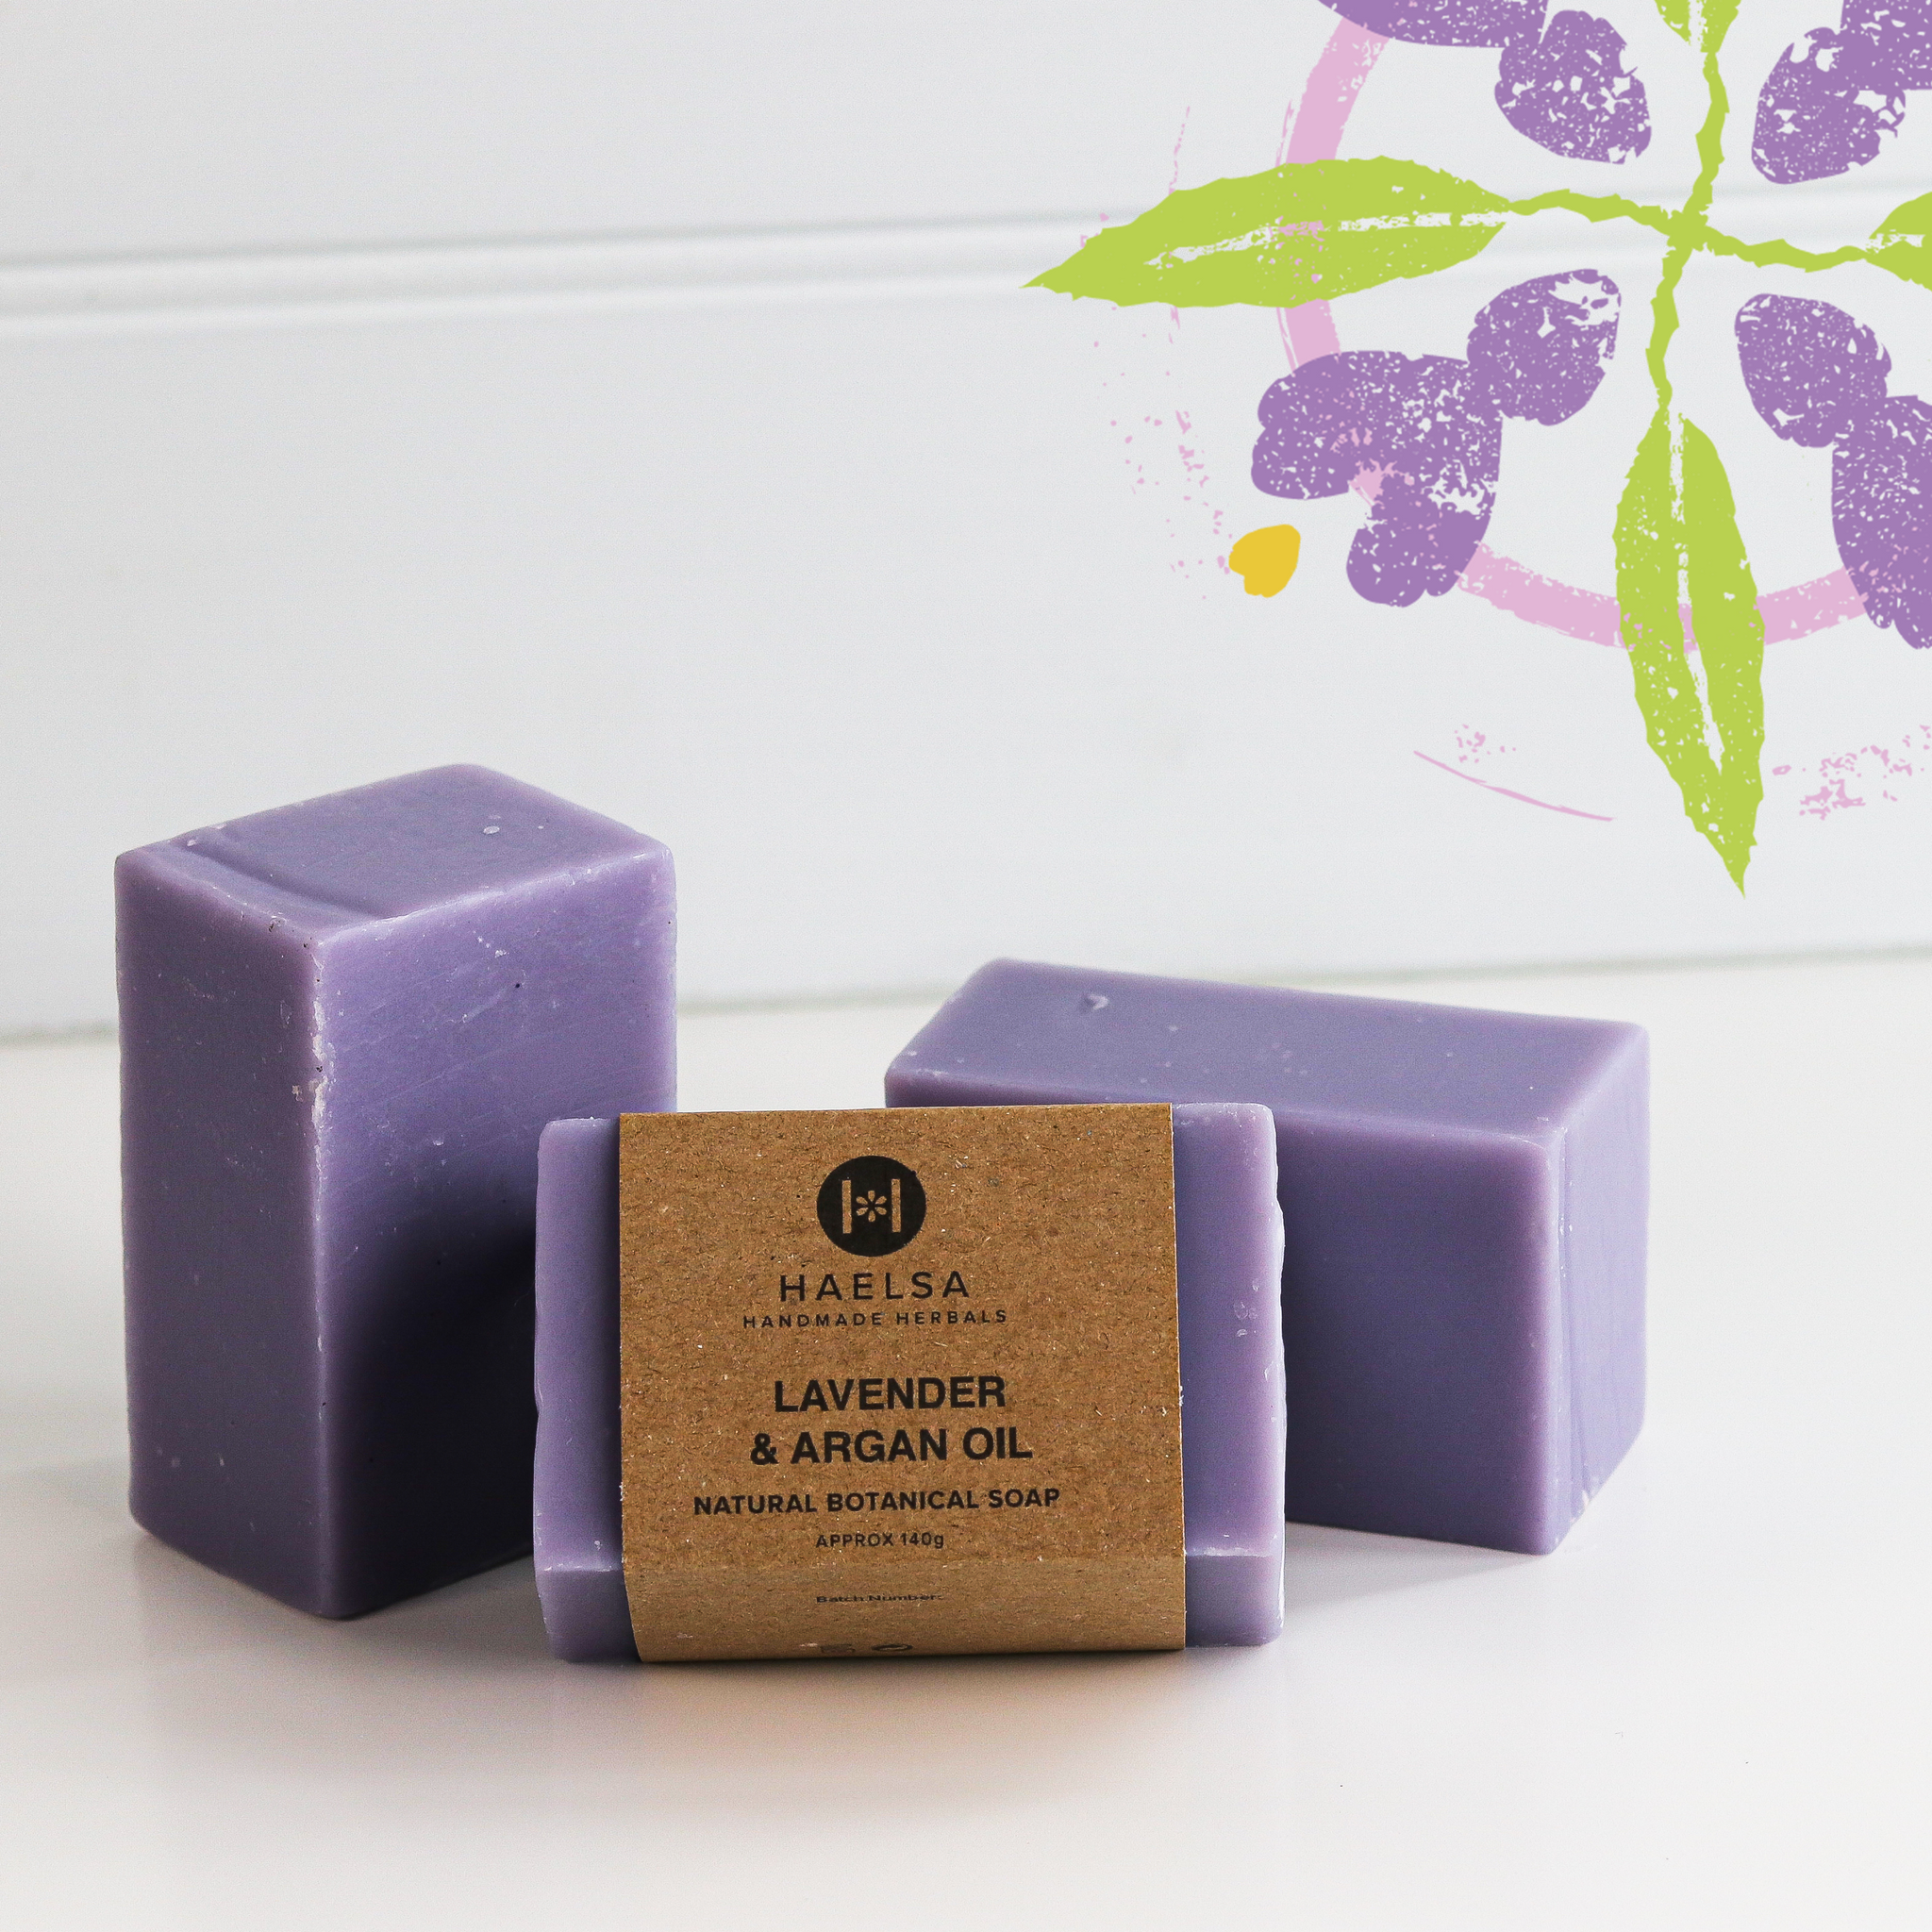 Lavender & argan oil soap in group